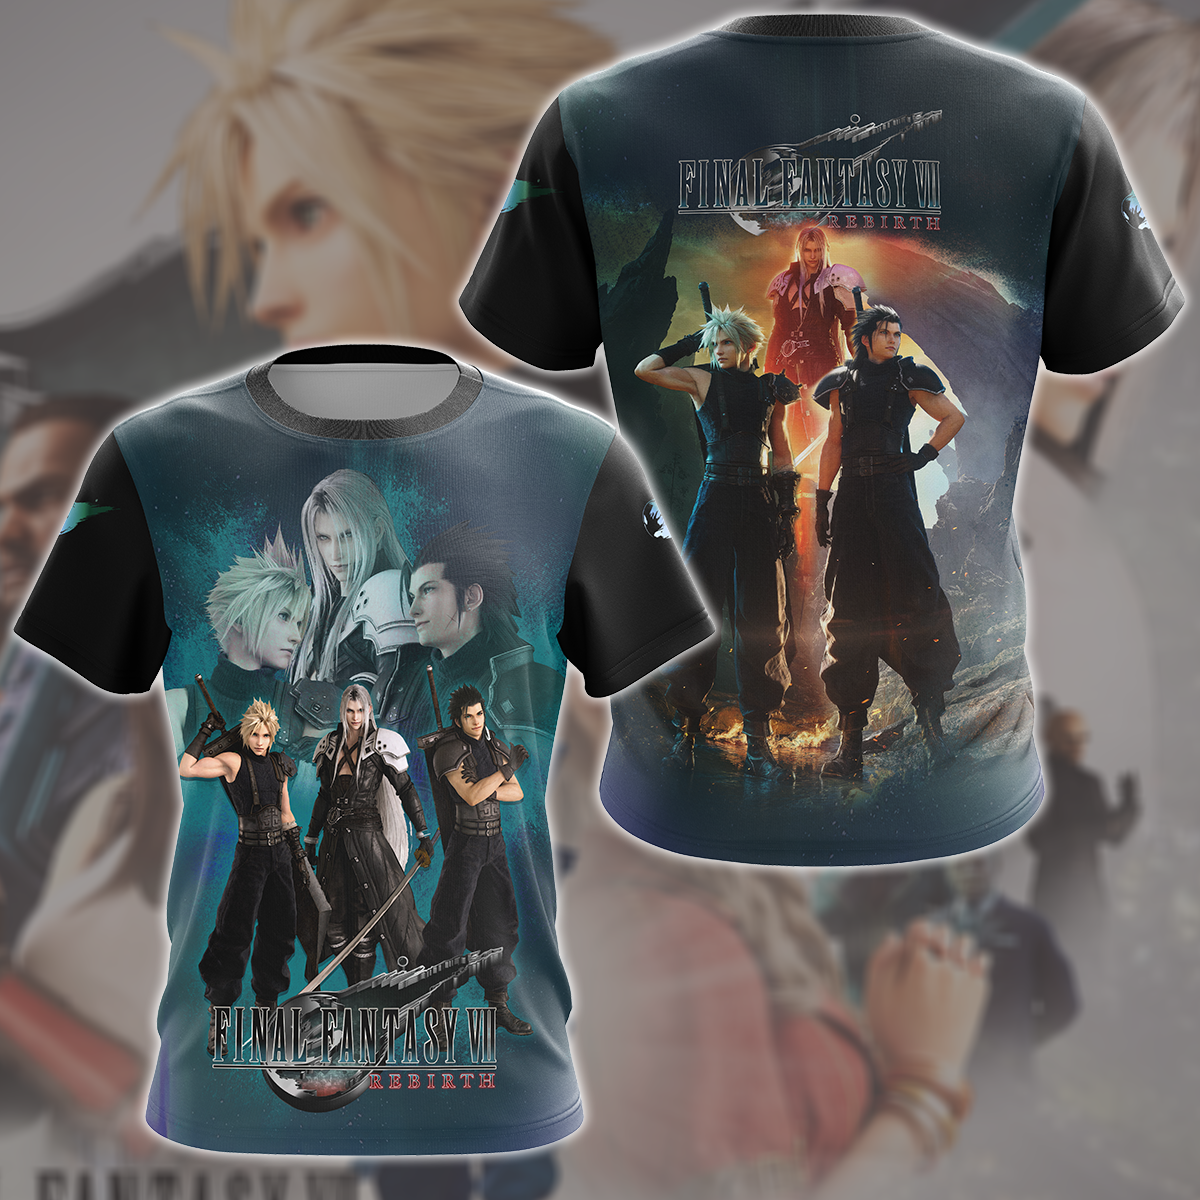 Final Fantasy 7 Rebirth Video Game All Over Printed T-shirt Tank Top Zip Hoodie Pullover Hoodie Hawaiian Shirt Beach Shorts Joggers T-shirt S 